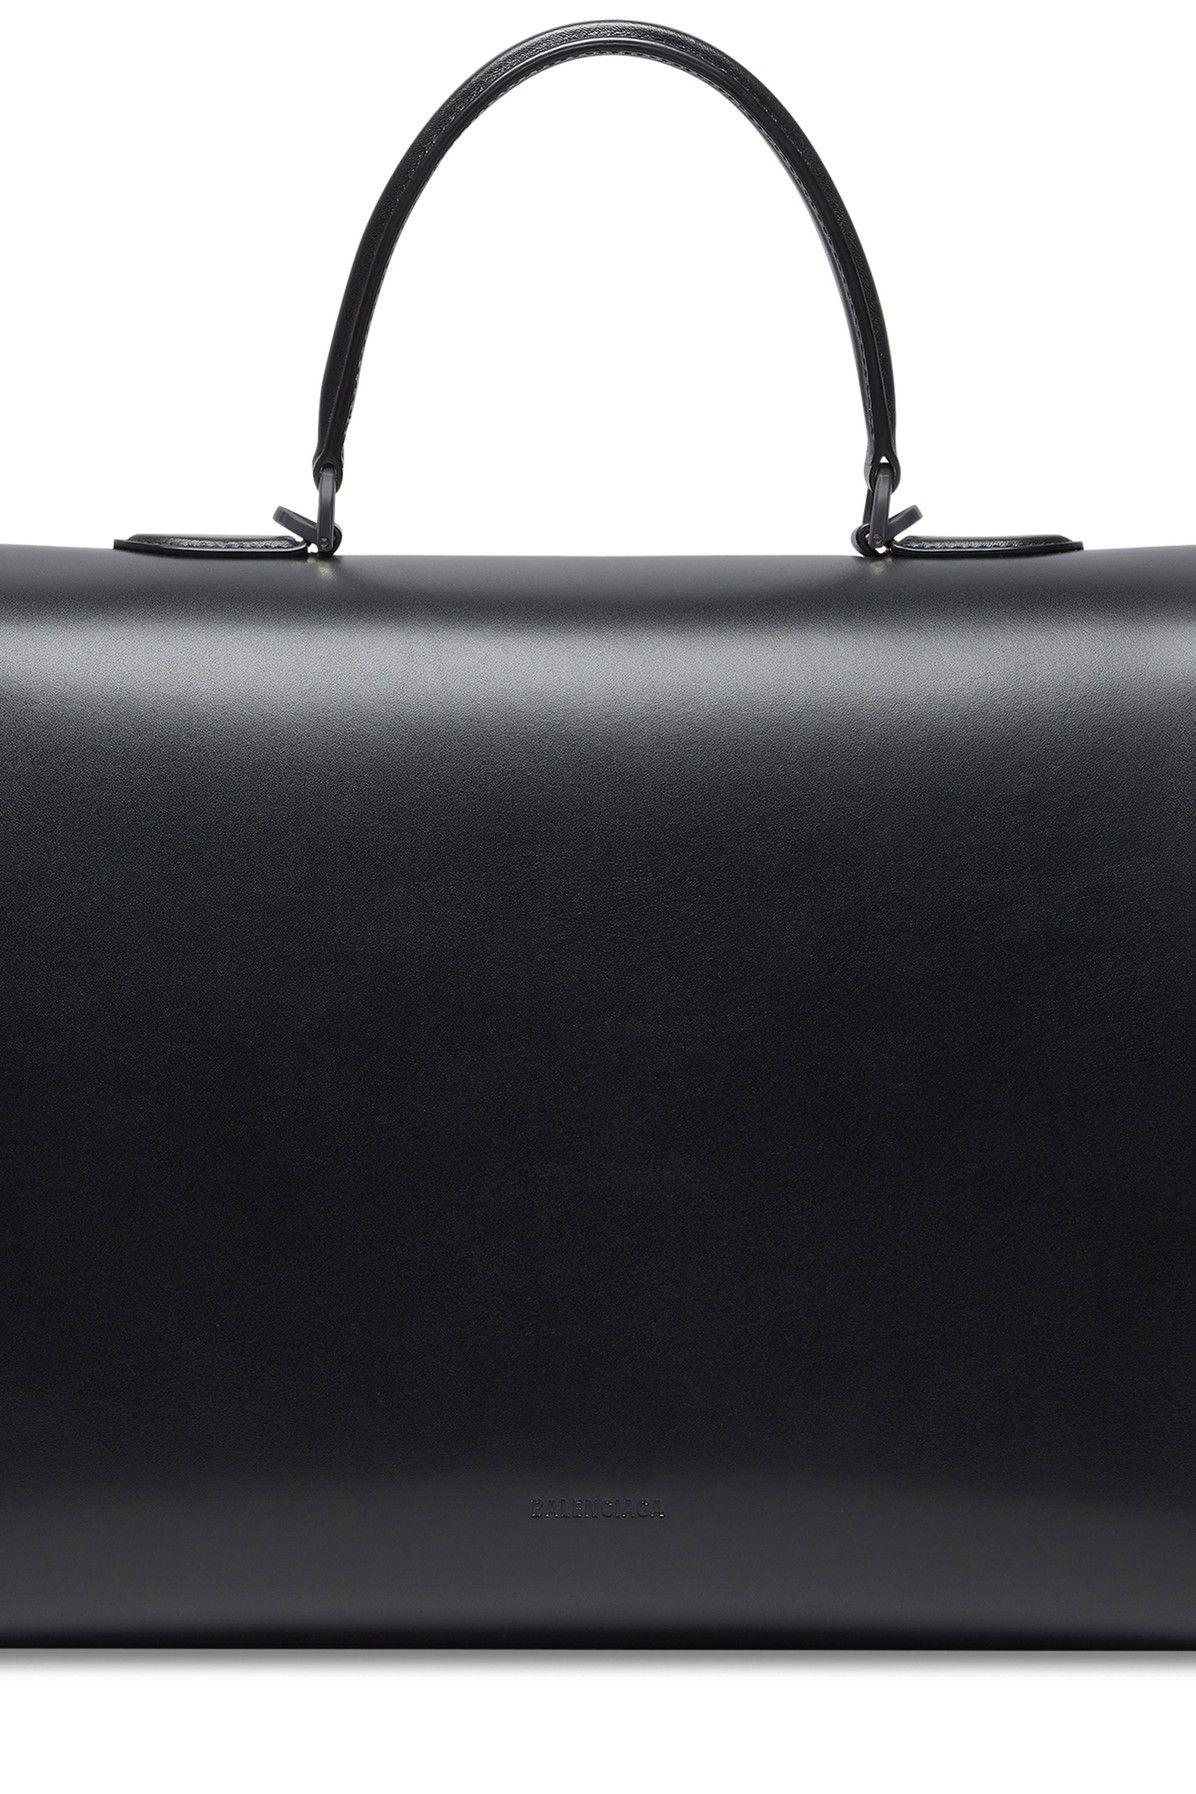 Balenciaga Money Handbag Large Model in Black | Lyst